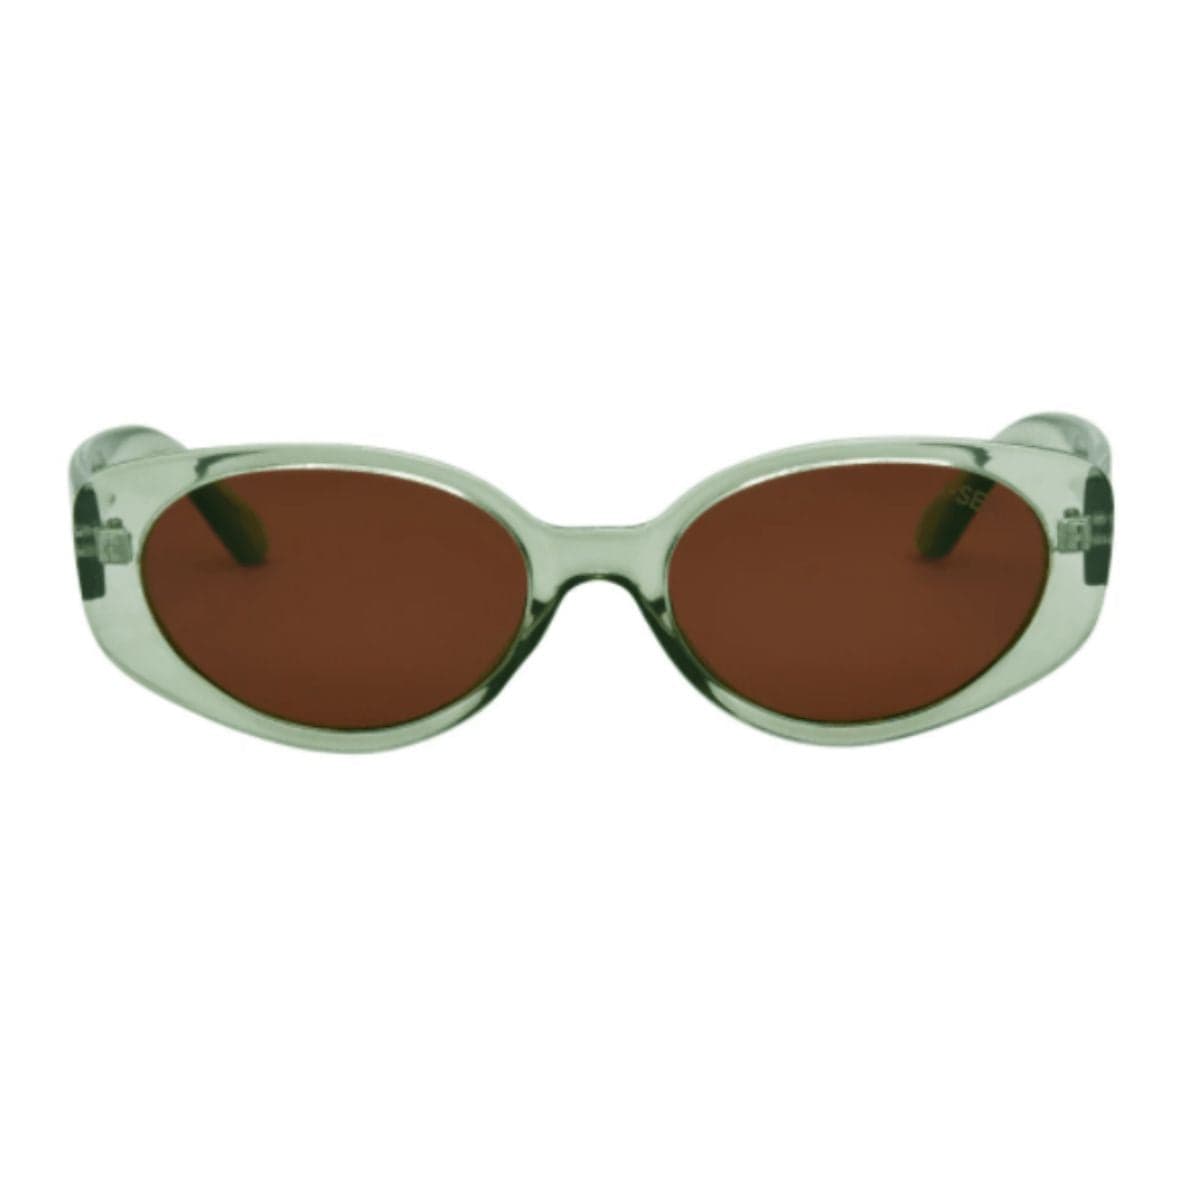 Marley Sunglasses (Mint/Brown)